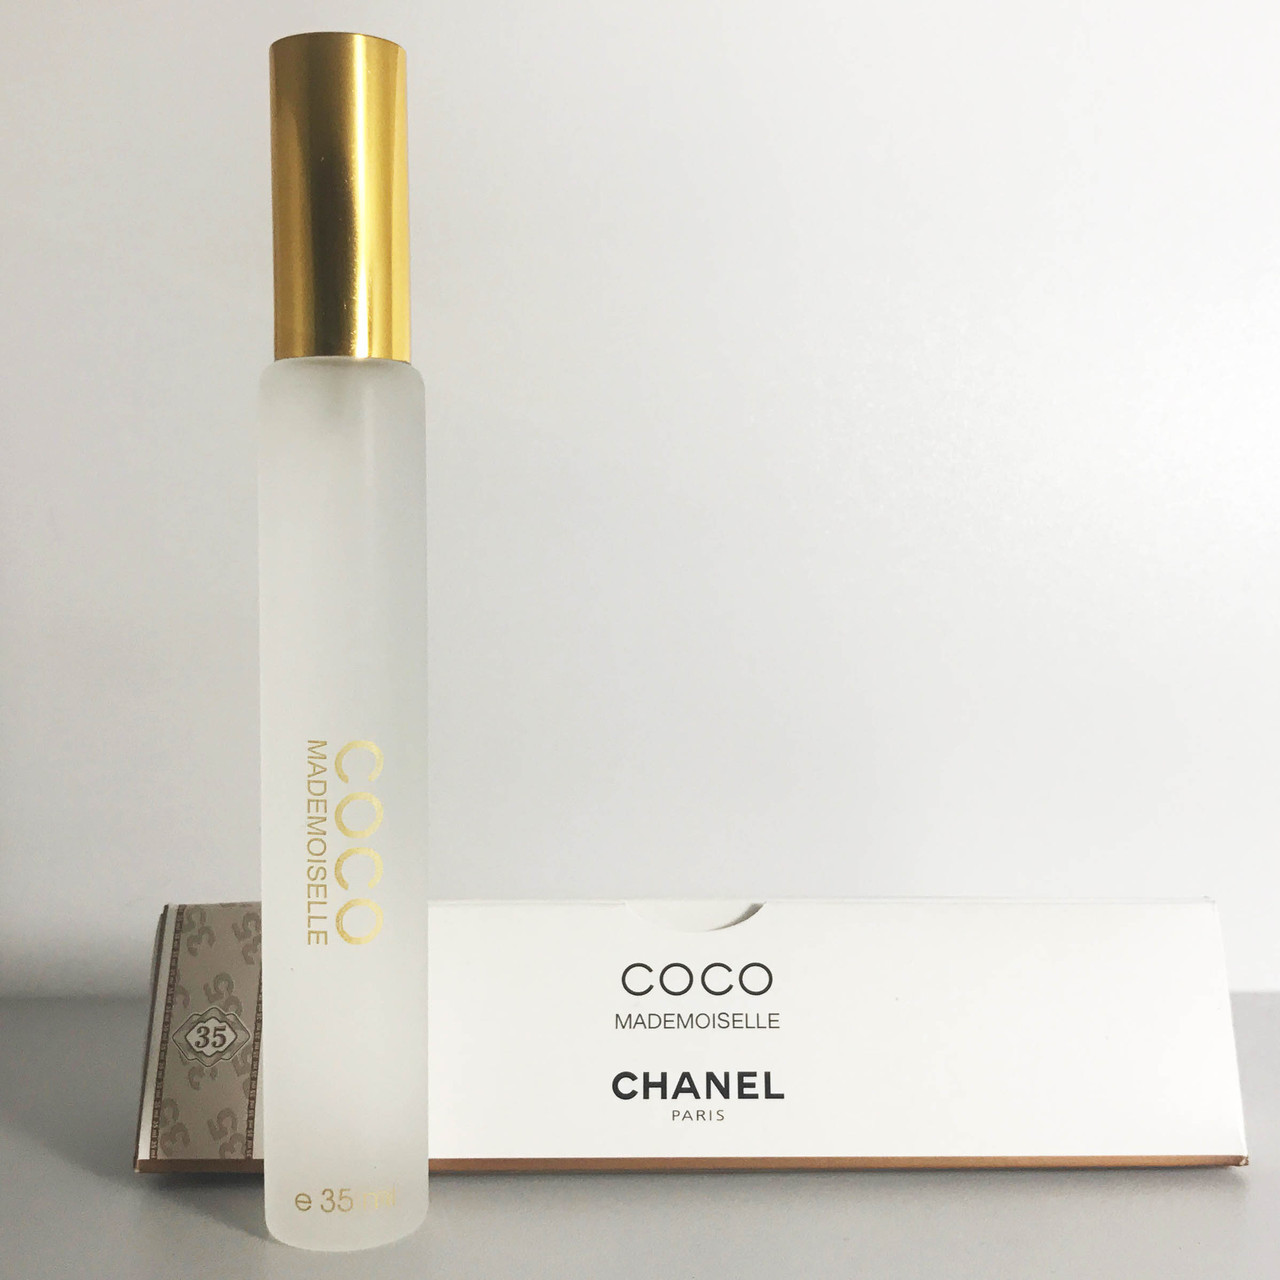 Chanel Coco Mademoiselle для женщин (35 ml) дорожный флакон, пробник-ручка (копия) Шанель Коко Мадмуазель духи